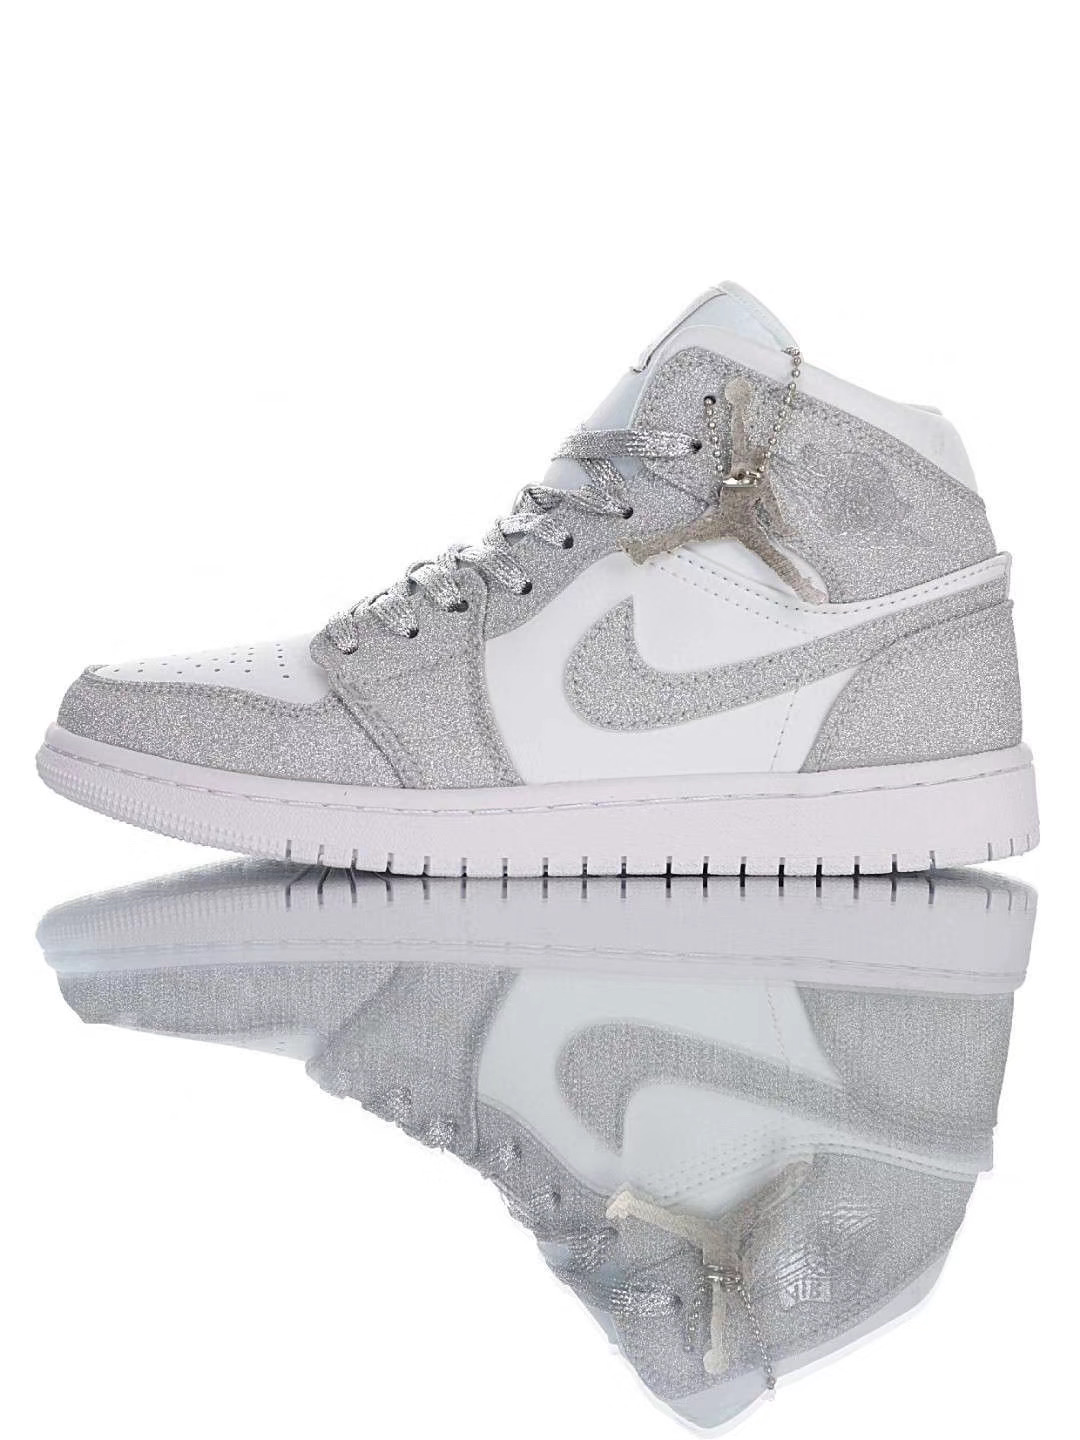 Air Jordan 1 High White Grey Shoes